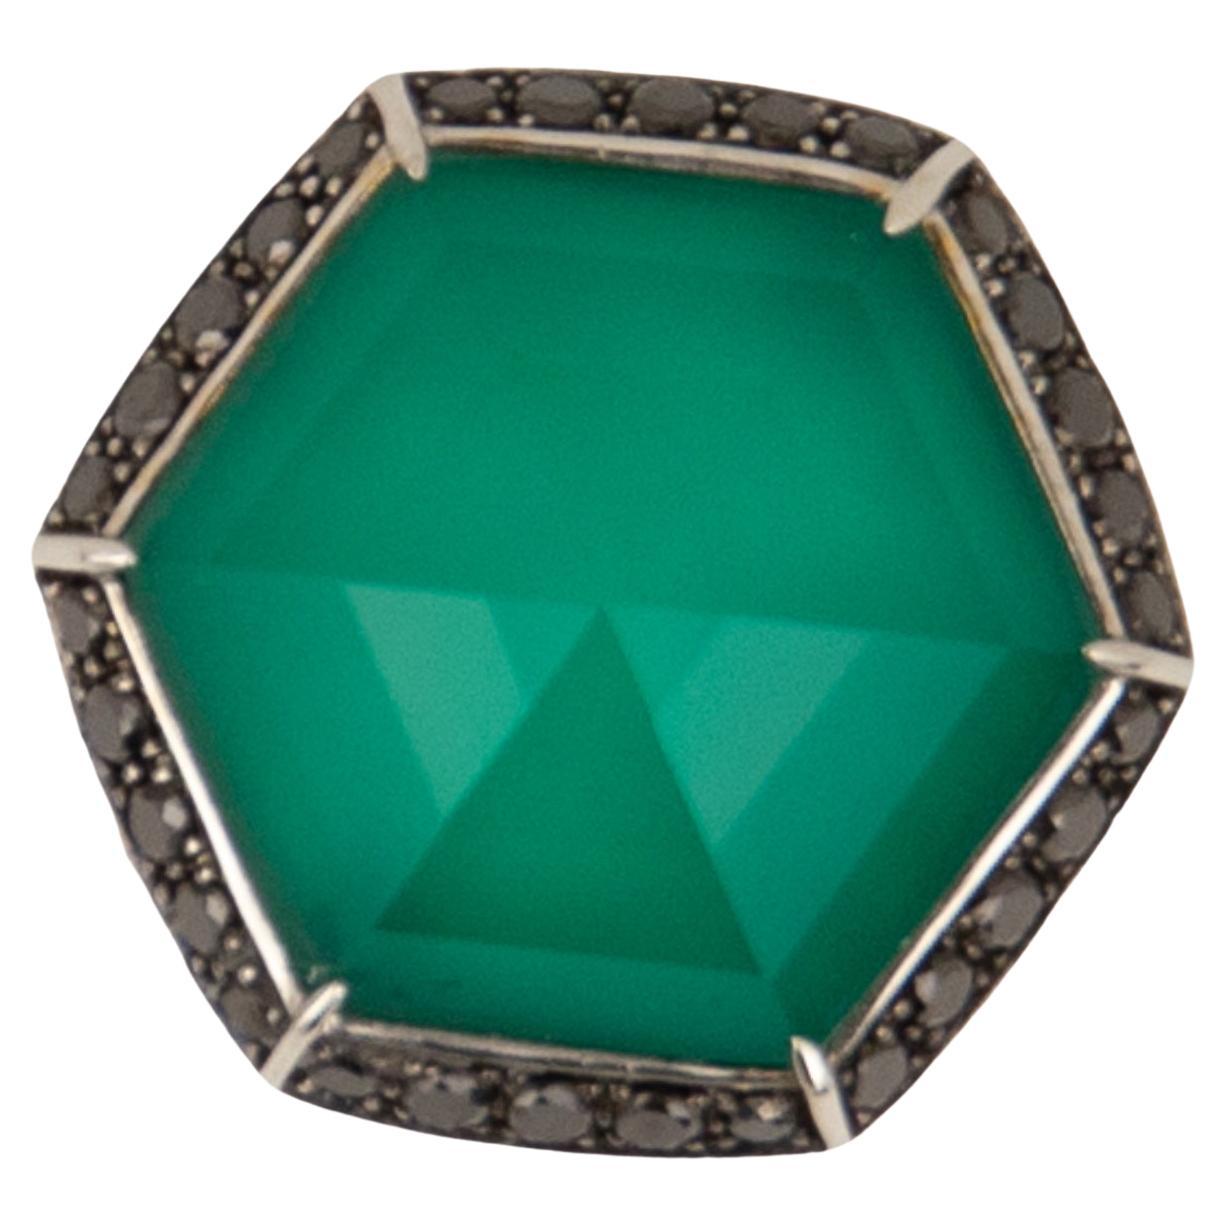 Green Quartz
Black Diamonds: 0.60ctw
Ring Size: 7
Model number: WR0922
SKU: SW01198
Retail price: $4,950.00